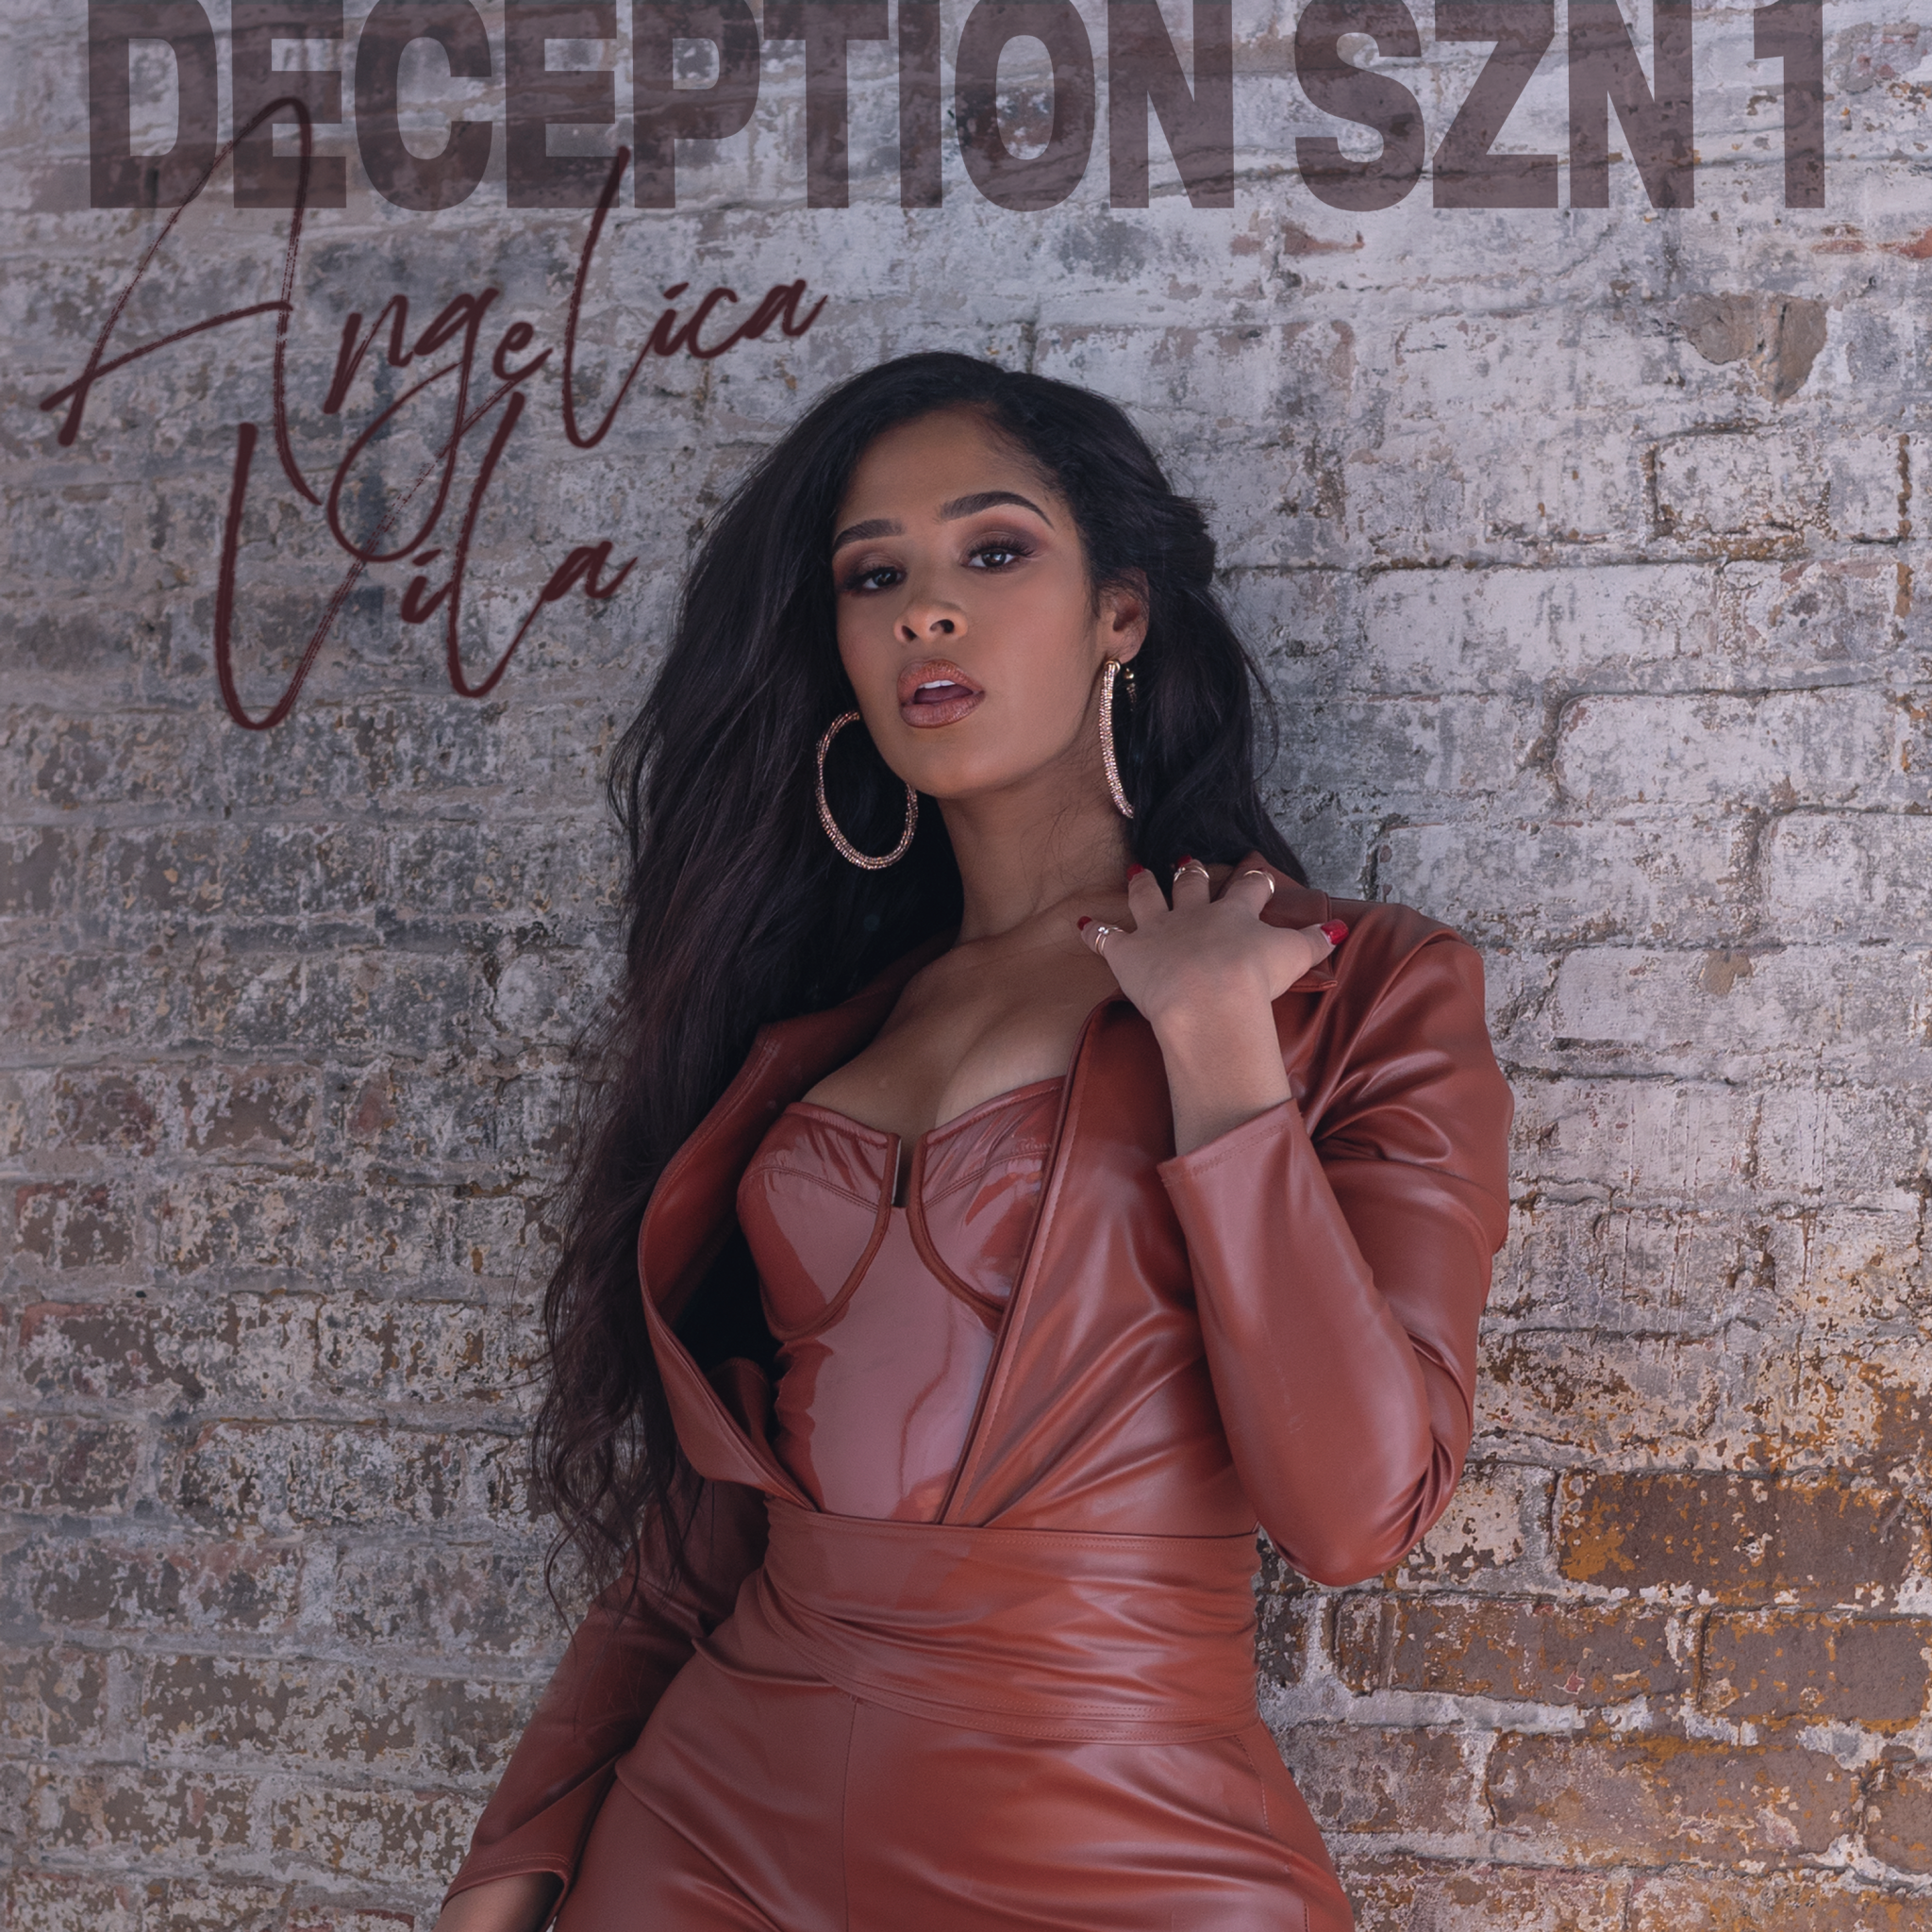 Angelica Vila Deception Szn 1 Album Cover